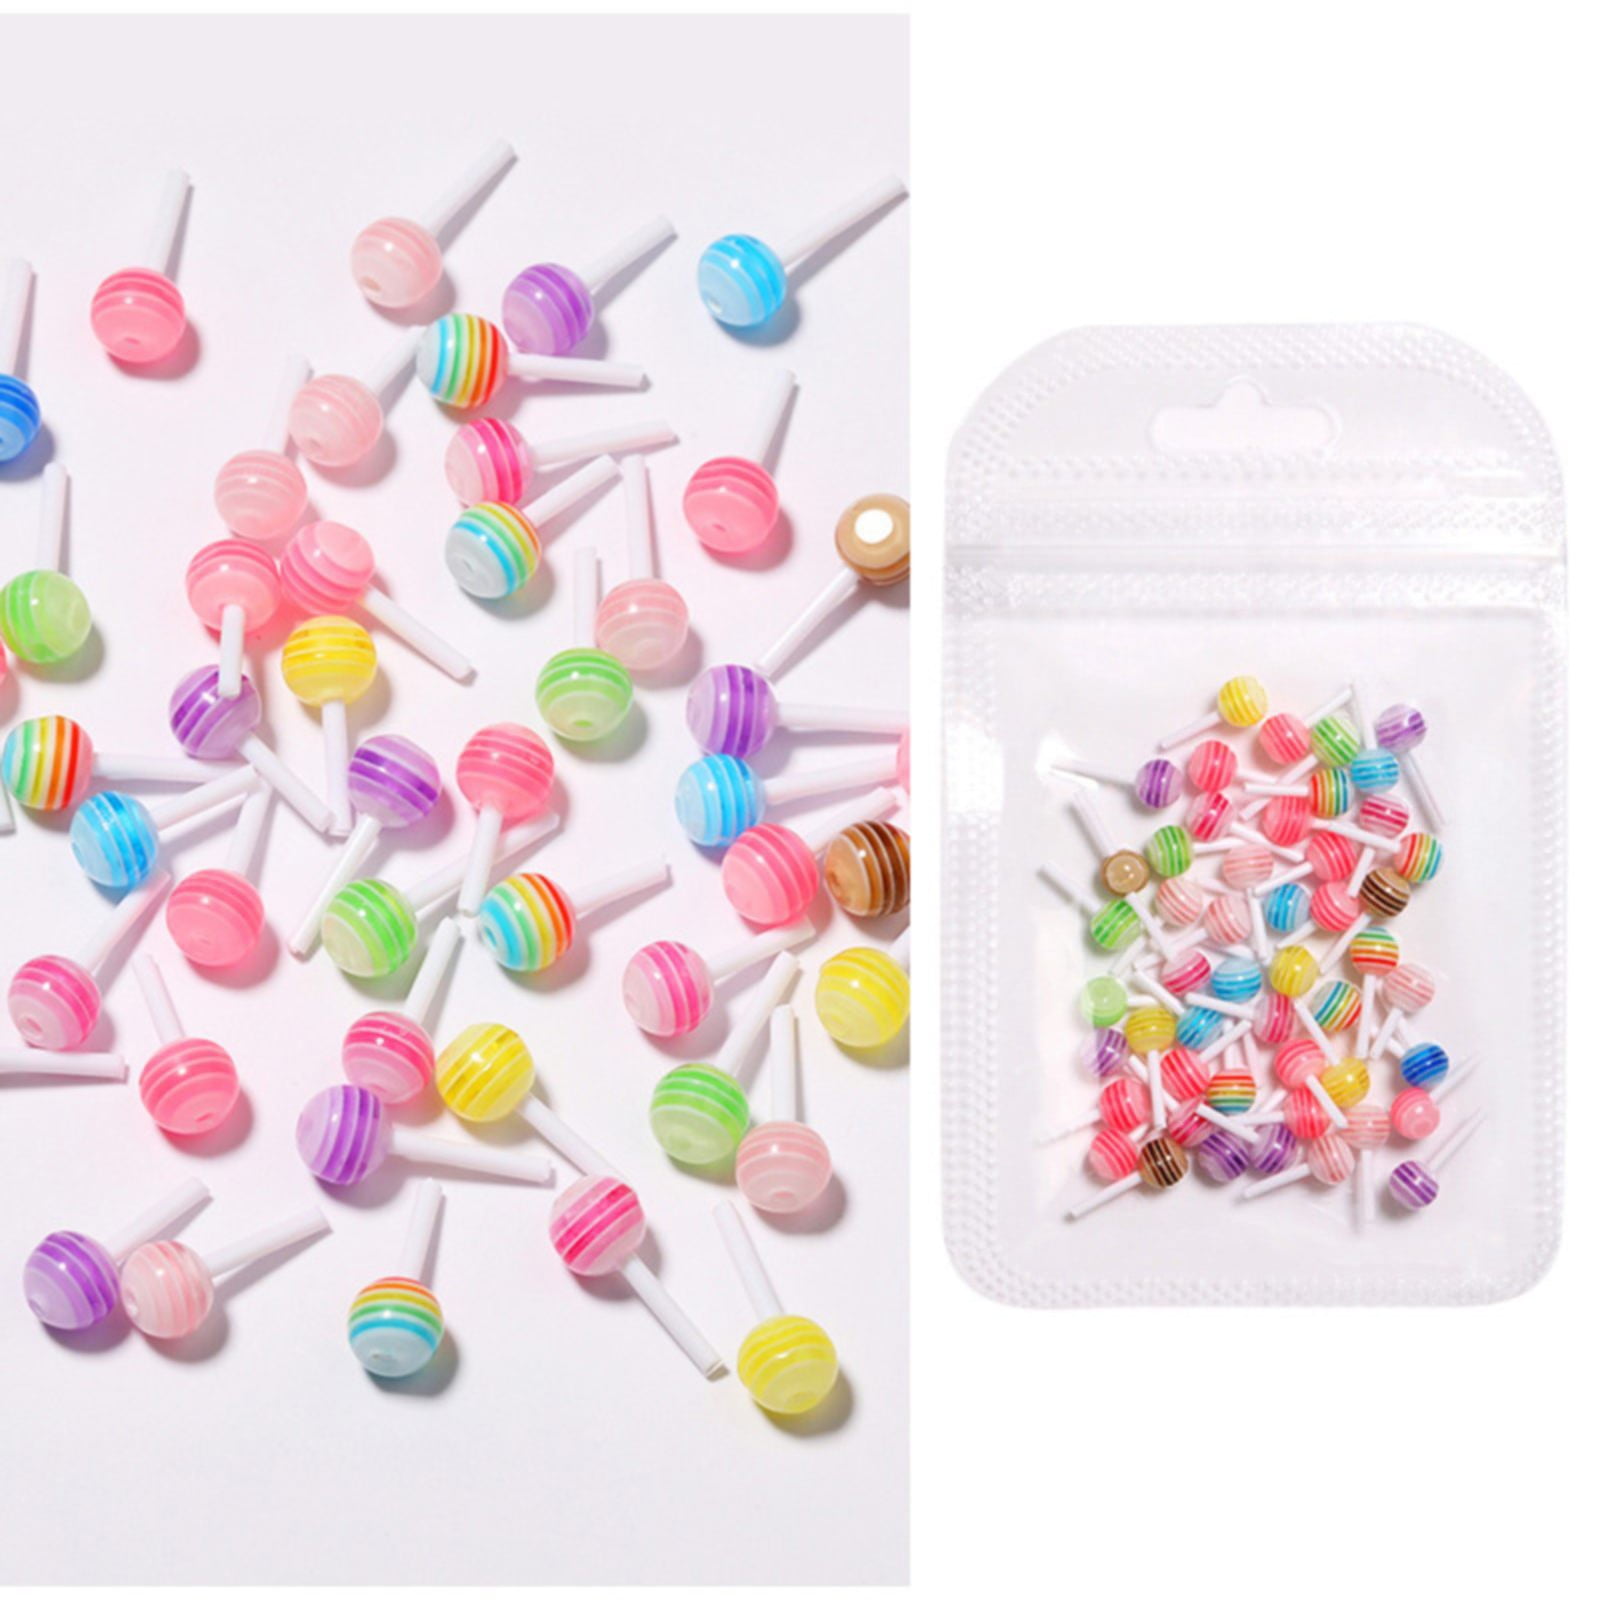 NIUREDLTD 50Pcs 3D Gummy Candy Nail Charms Colorful Sugar Gummie Candy  Lollipop Cute Kawaii 3D Nail Art Charms For Nail Art Designs DIY Crafting  Accessories 